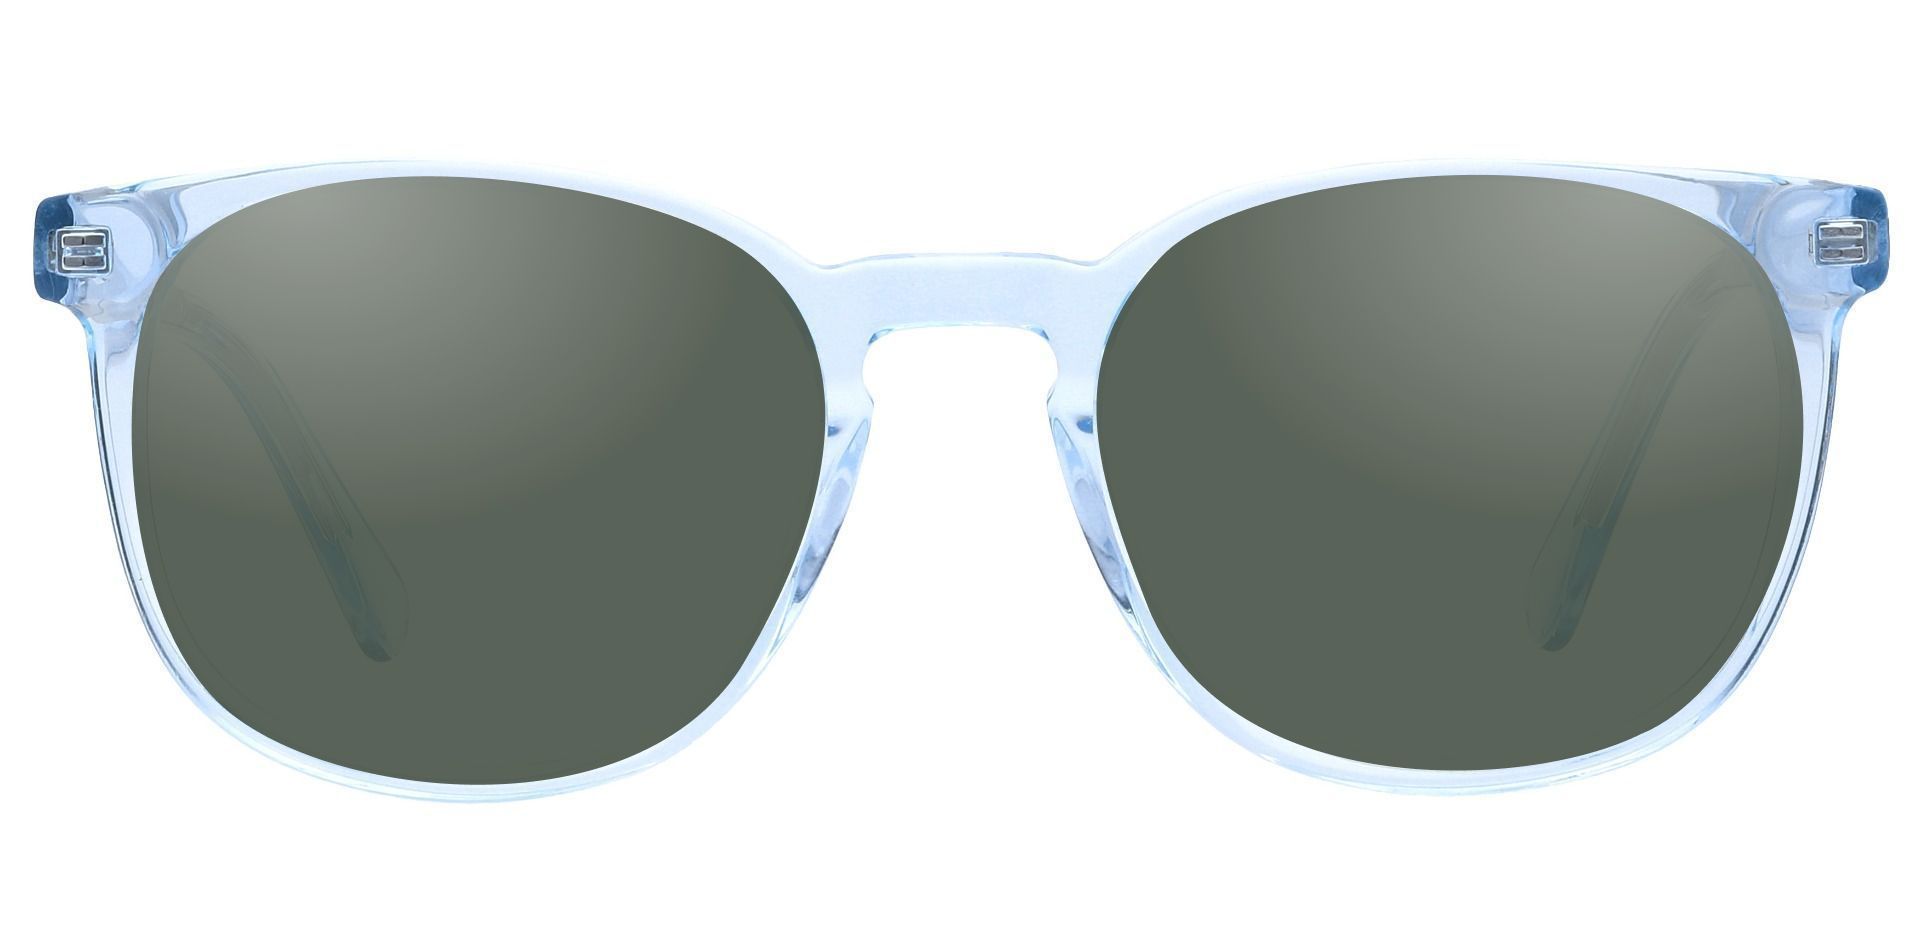 Nebula Round Prescription Sunglasses - Blue Frame With Green Lenses